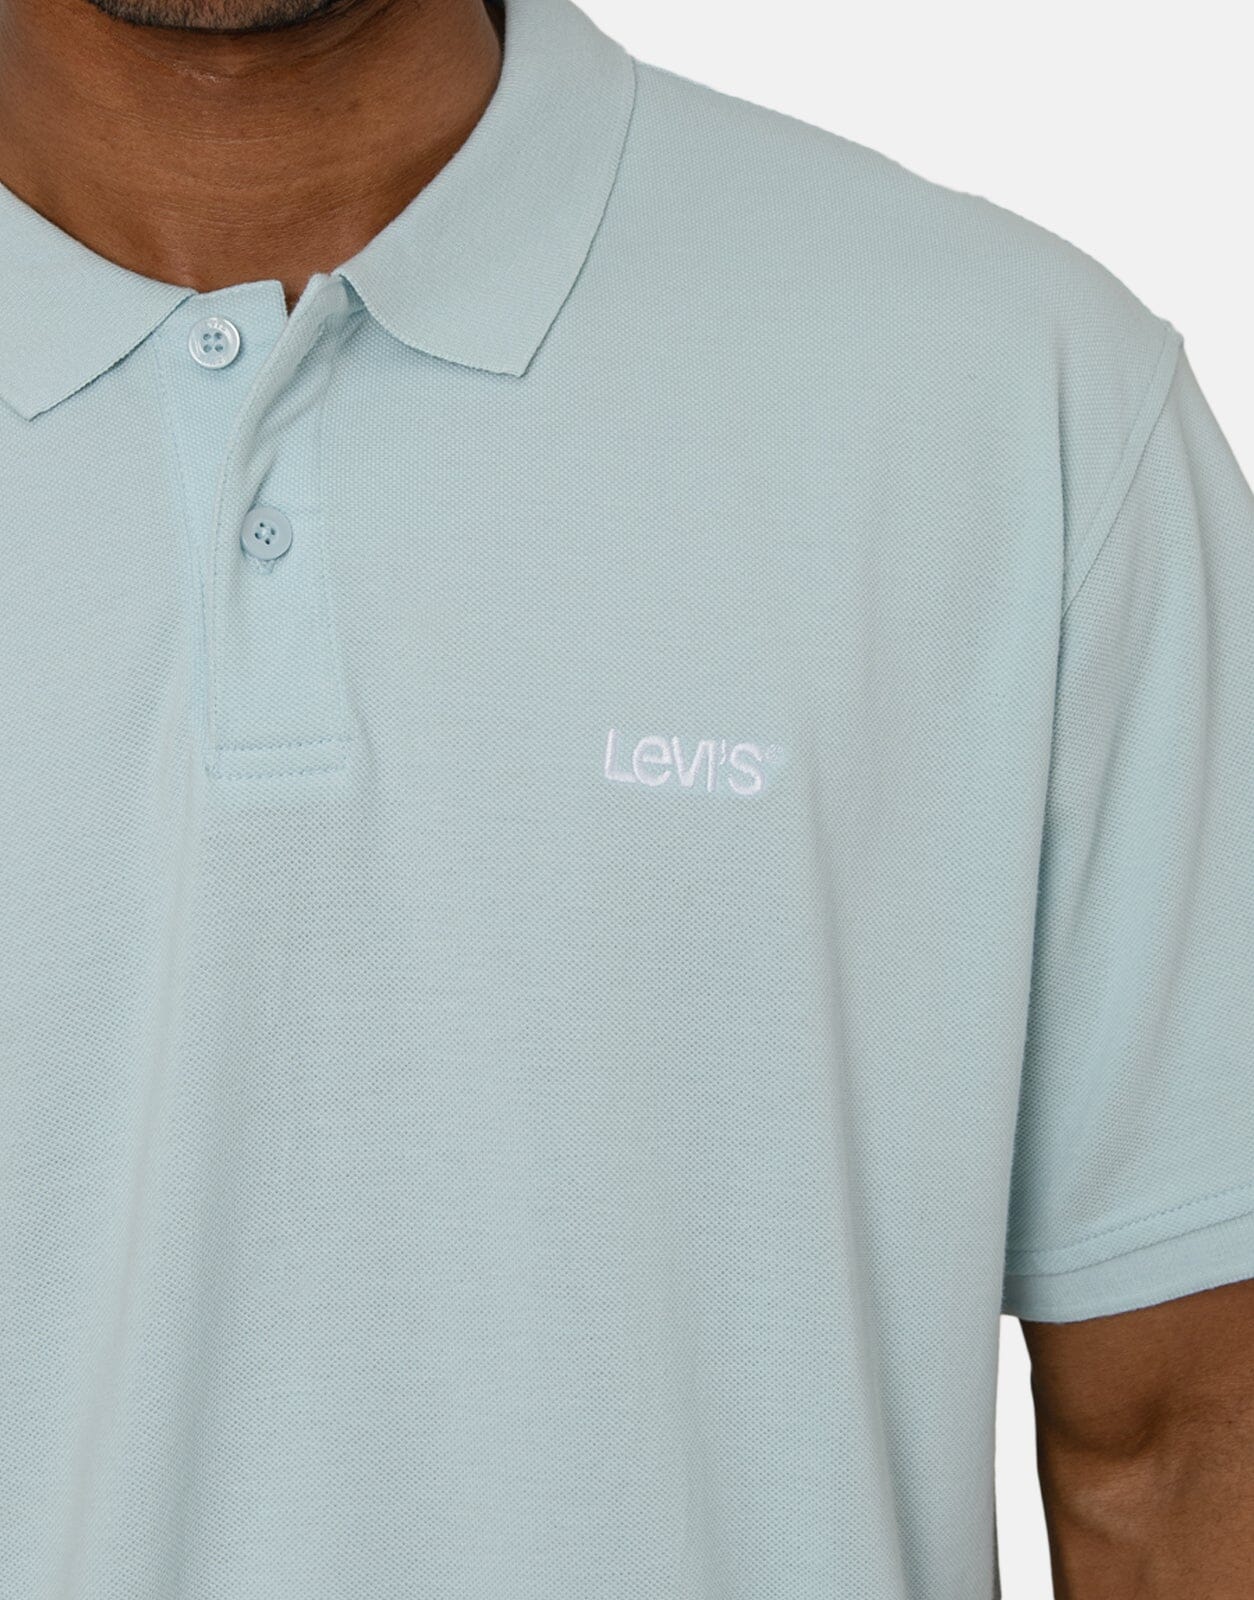 Levi's Authentic Polo - Subwear